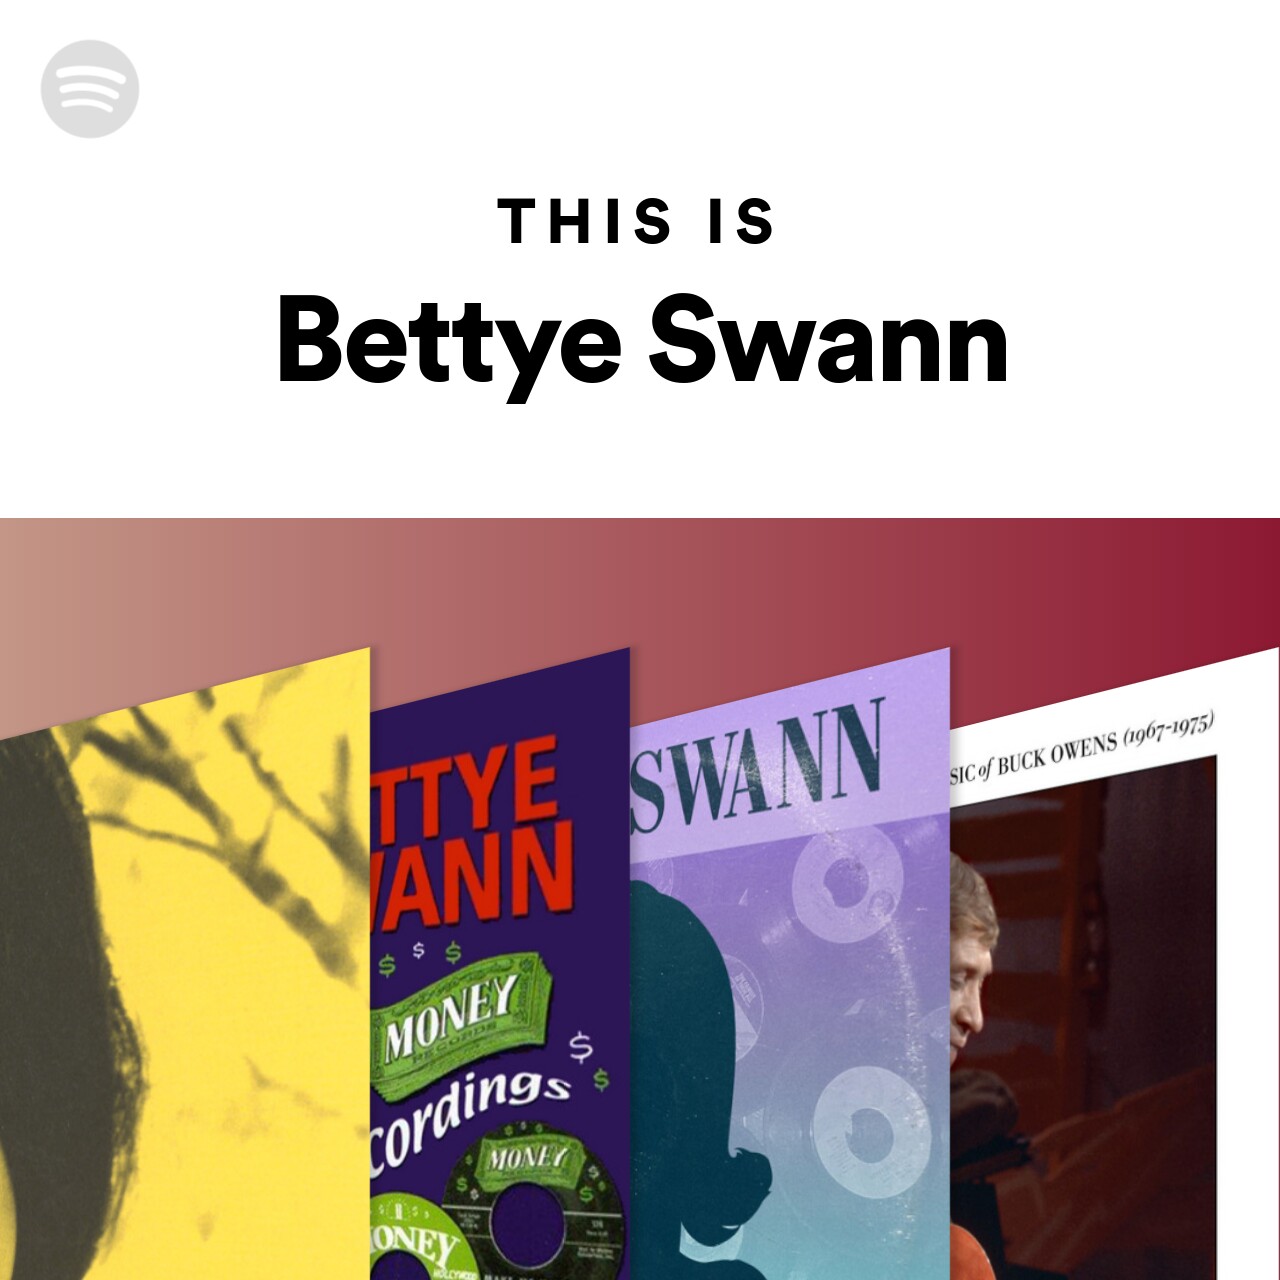 This Is Bettye Swann